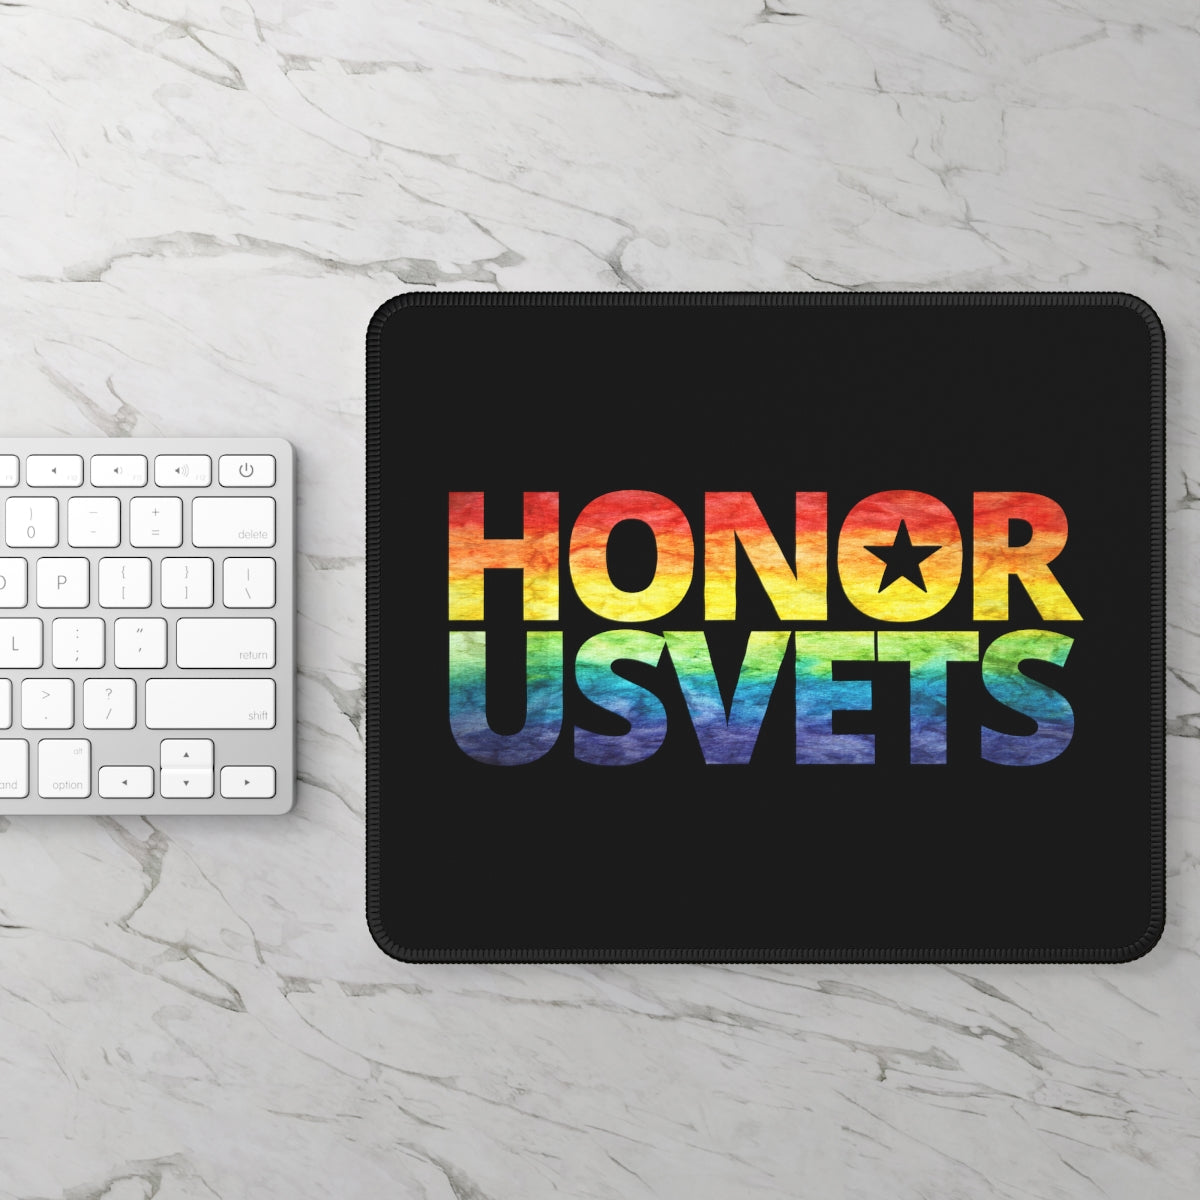 HONORUSVETS Pride Rainbow Gaming Mouse Pad